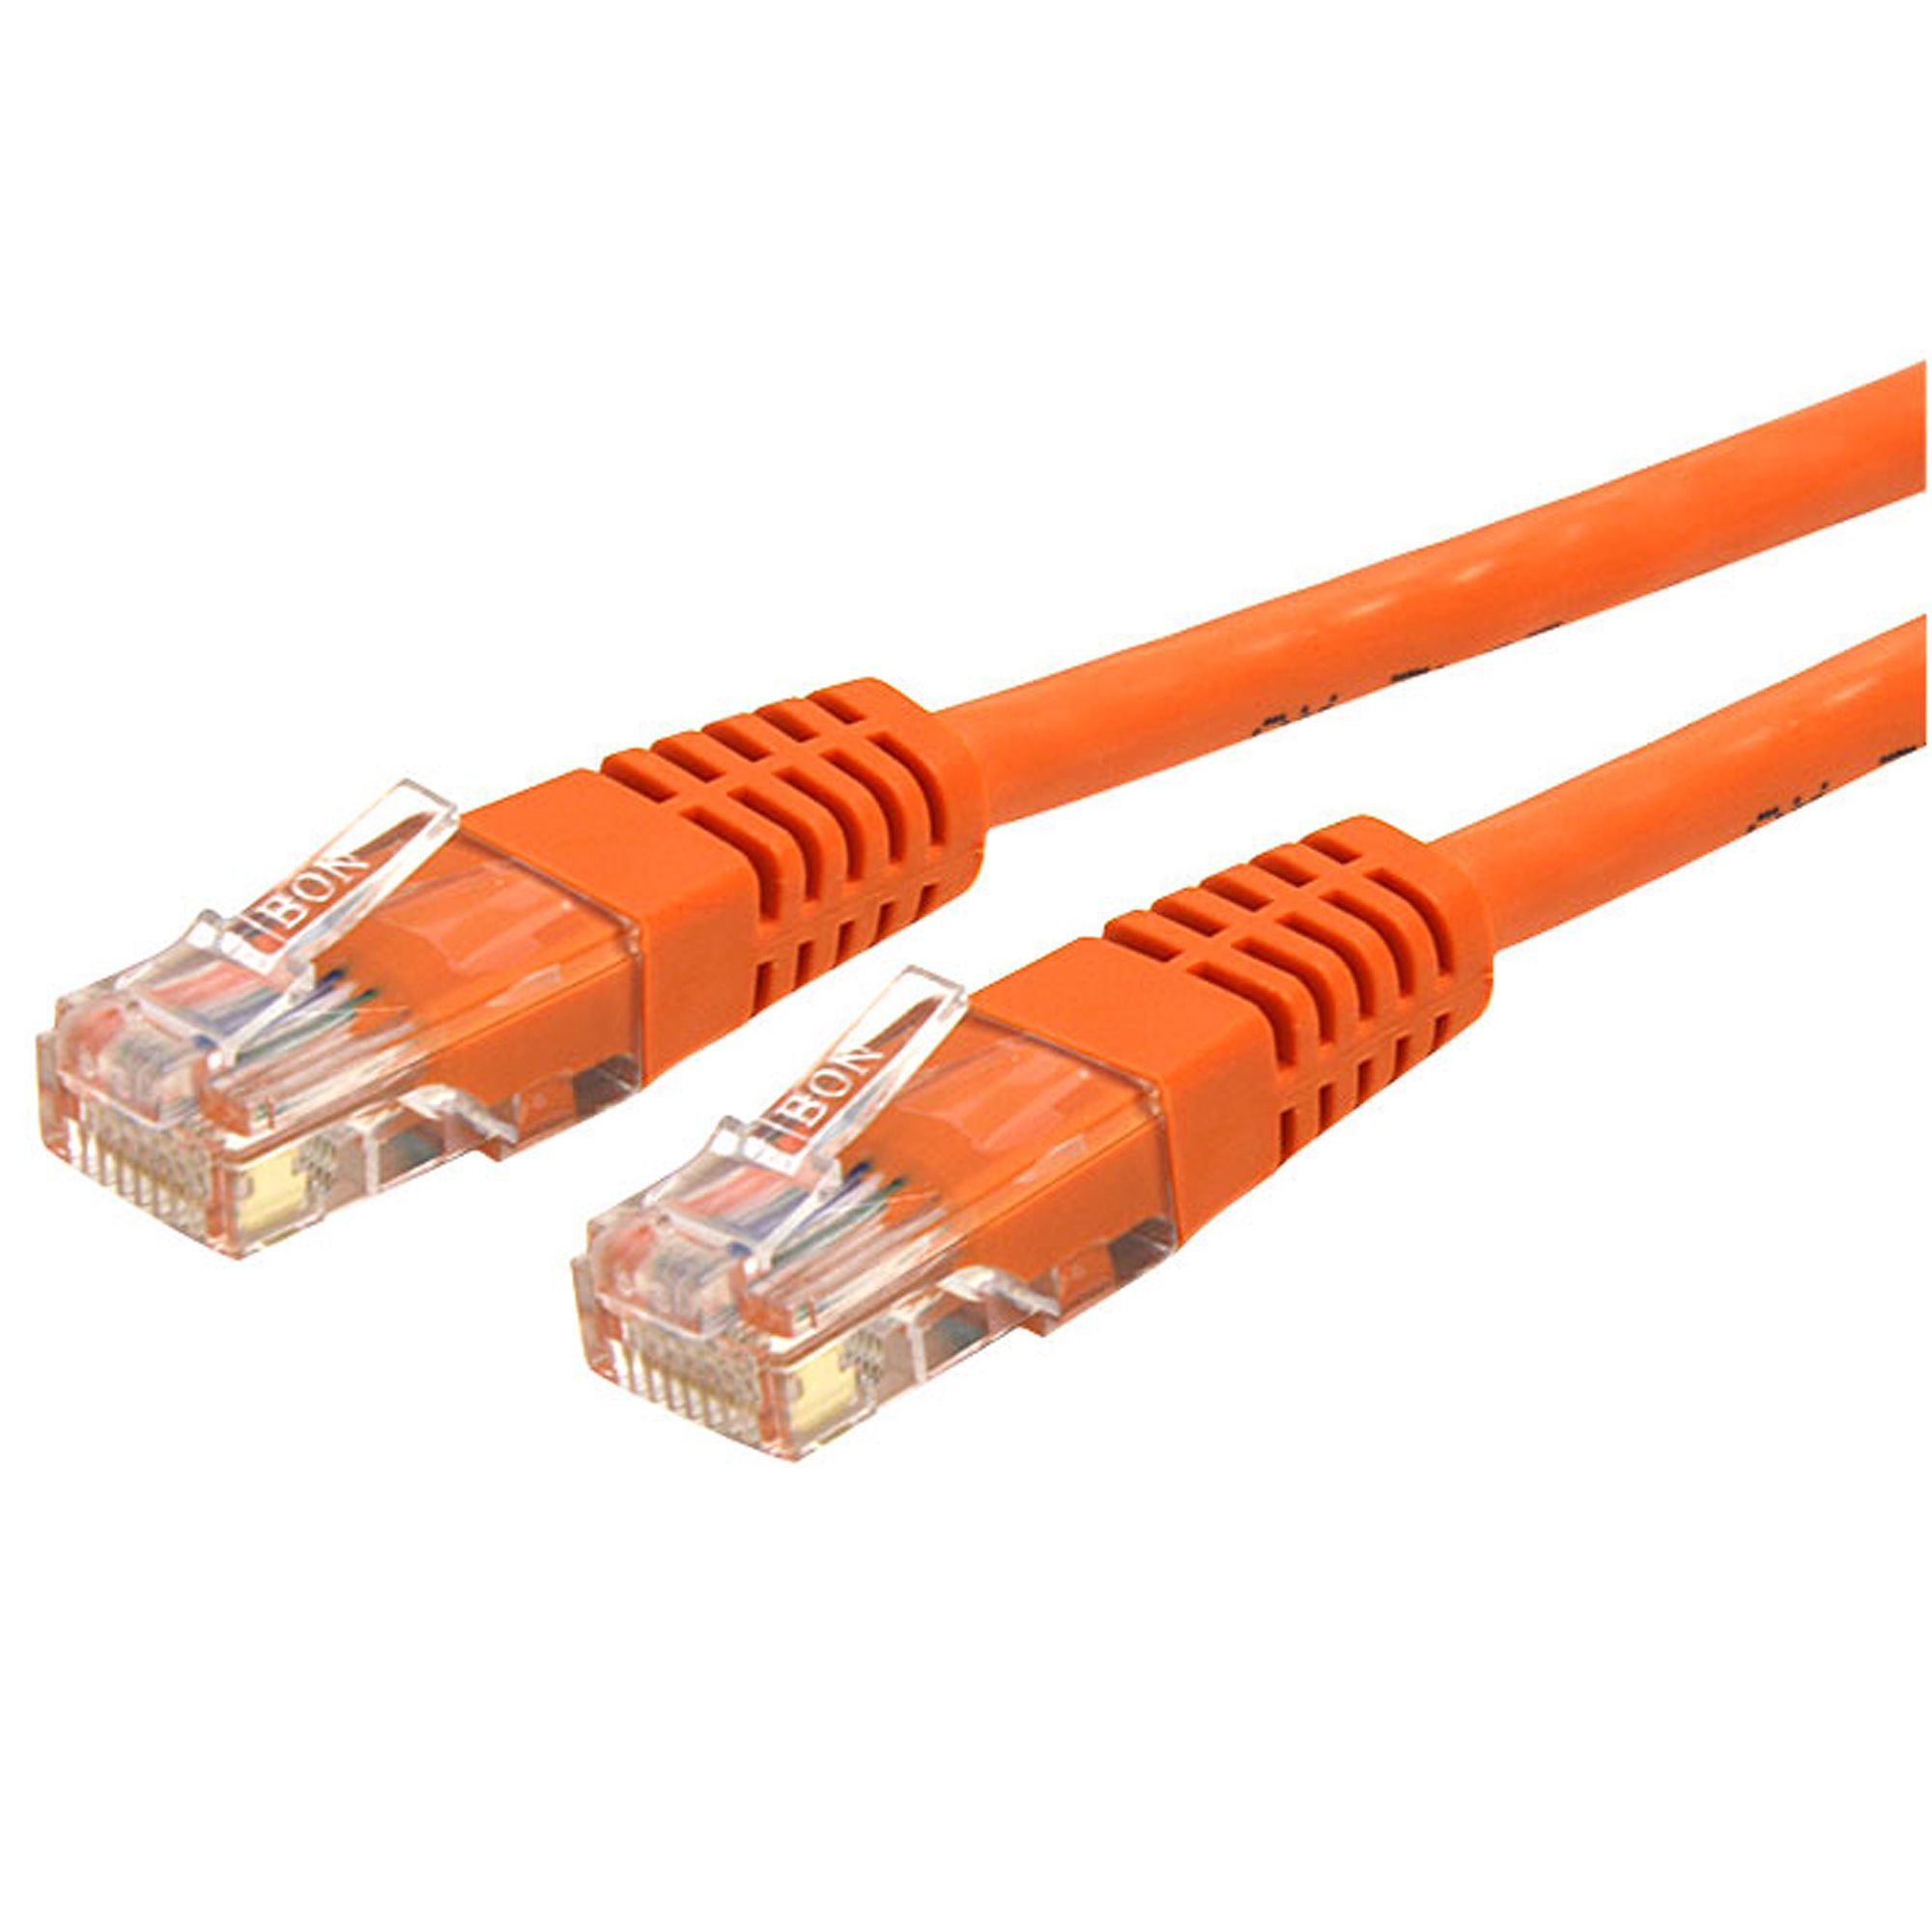 Cable 4.5M Gigabit  Red  Cat6 Utp Rj45  Naranja  Startech C6Patch15Or